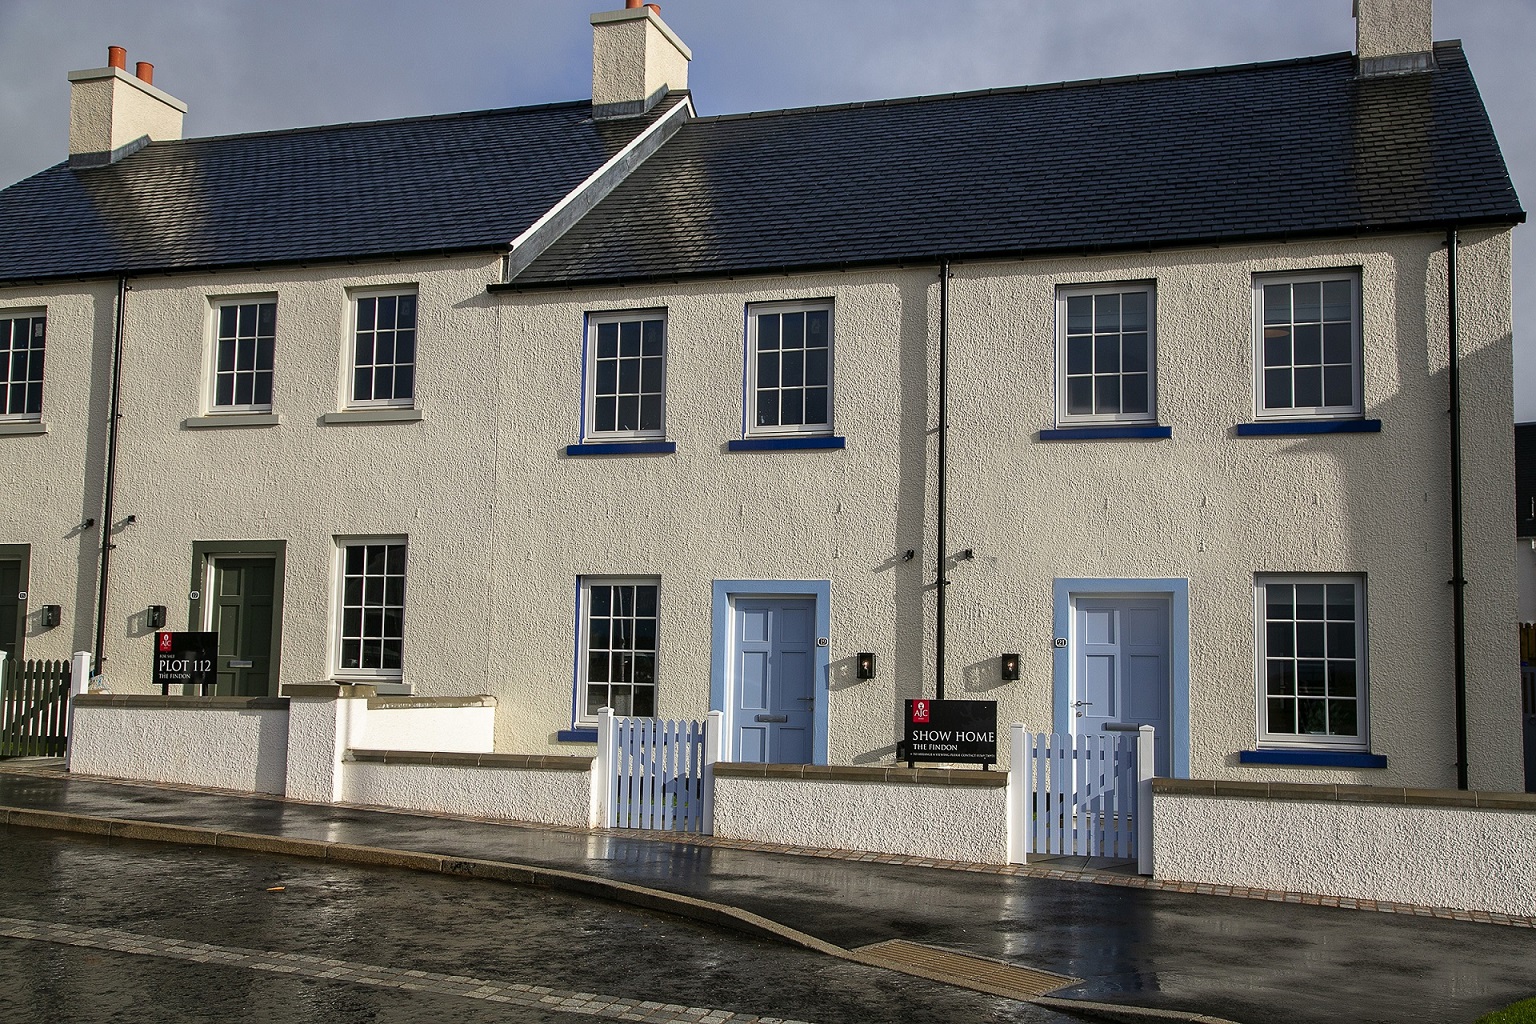 97  Ajc homes scotland with Simple Decor